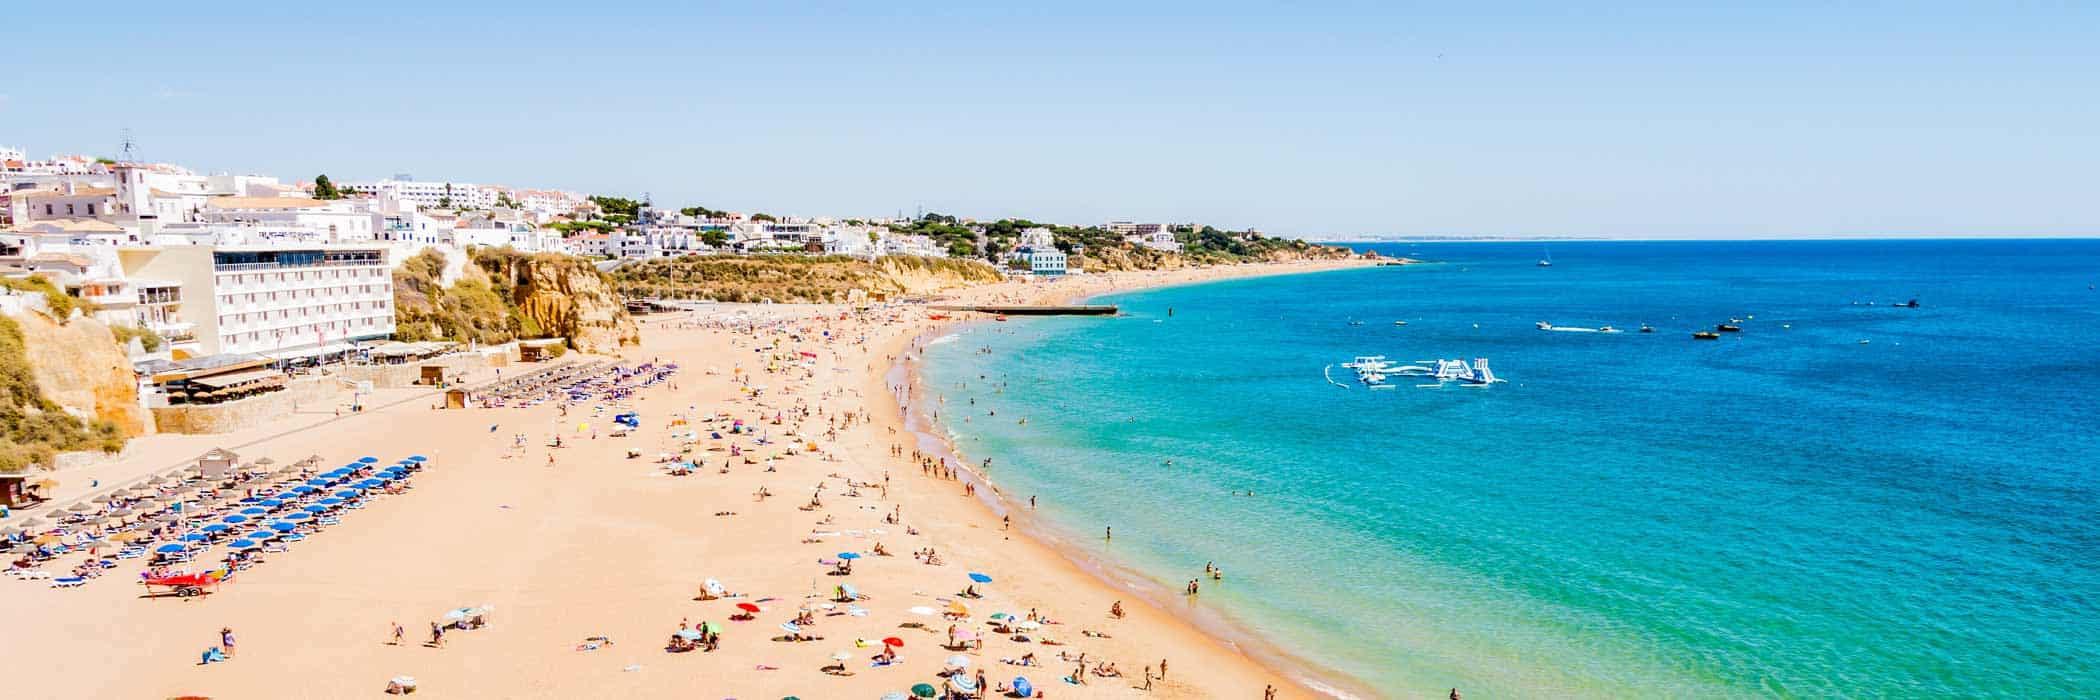 Algarve Beach - Pay Monthly Holidays